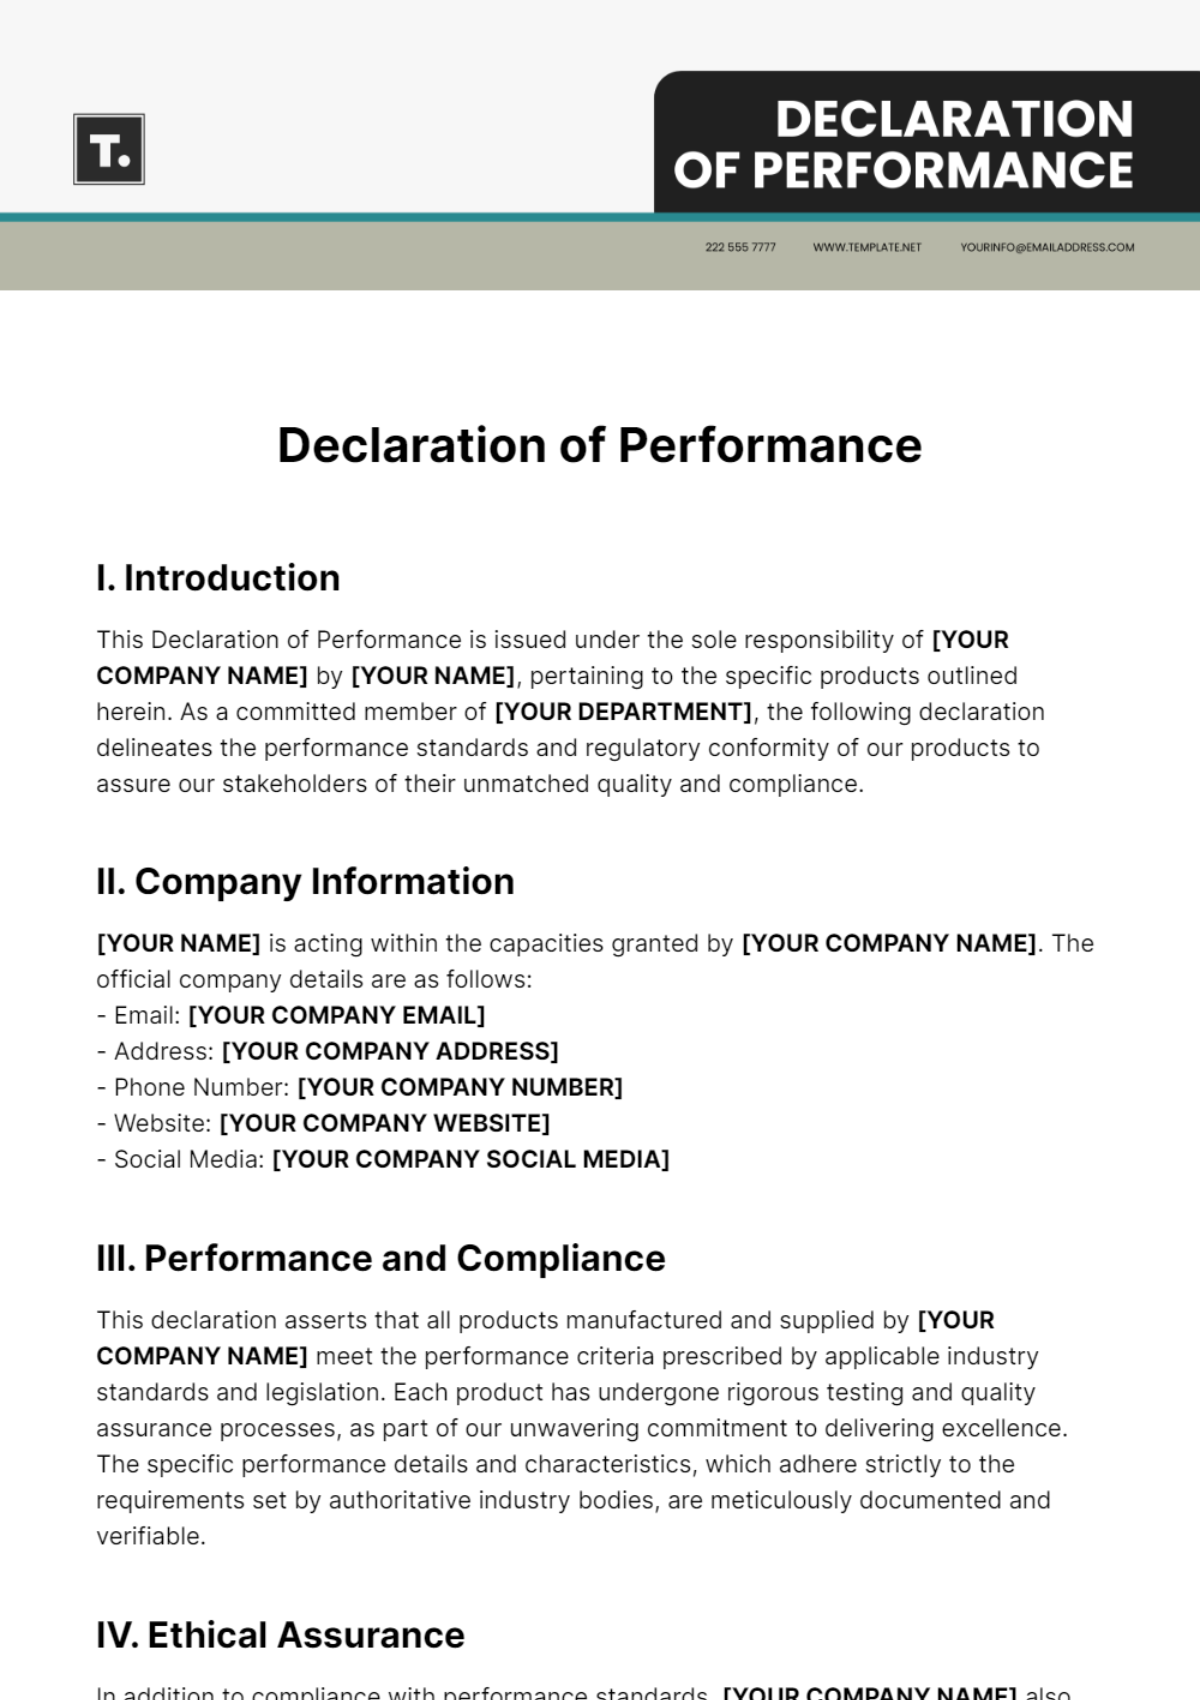 Declaration of Performance Template